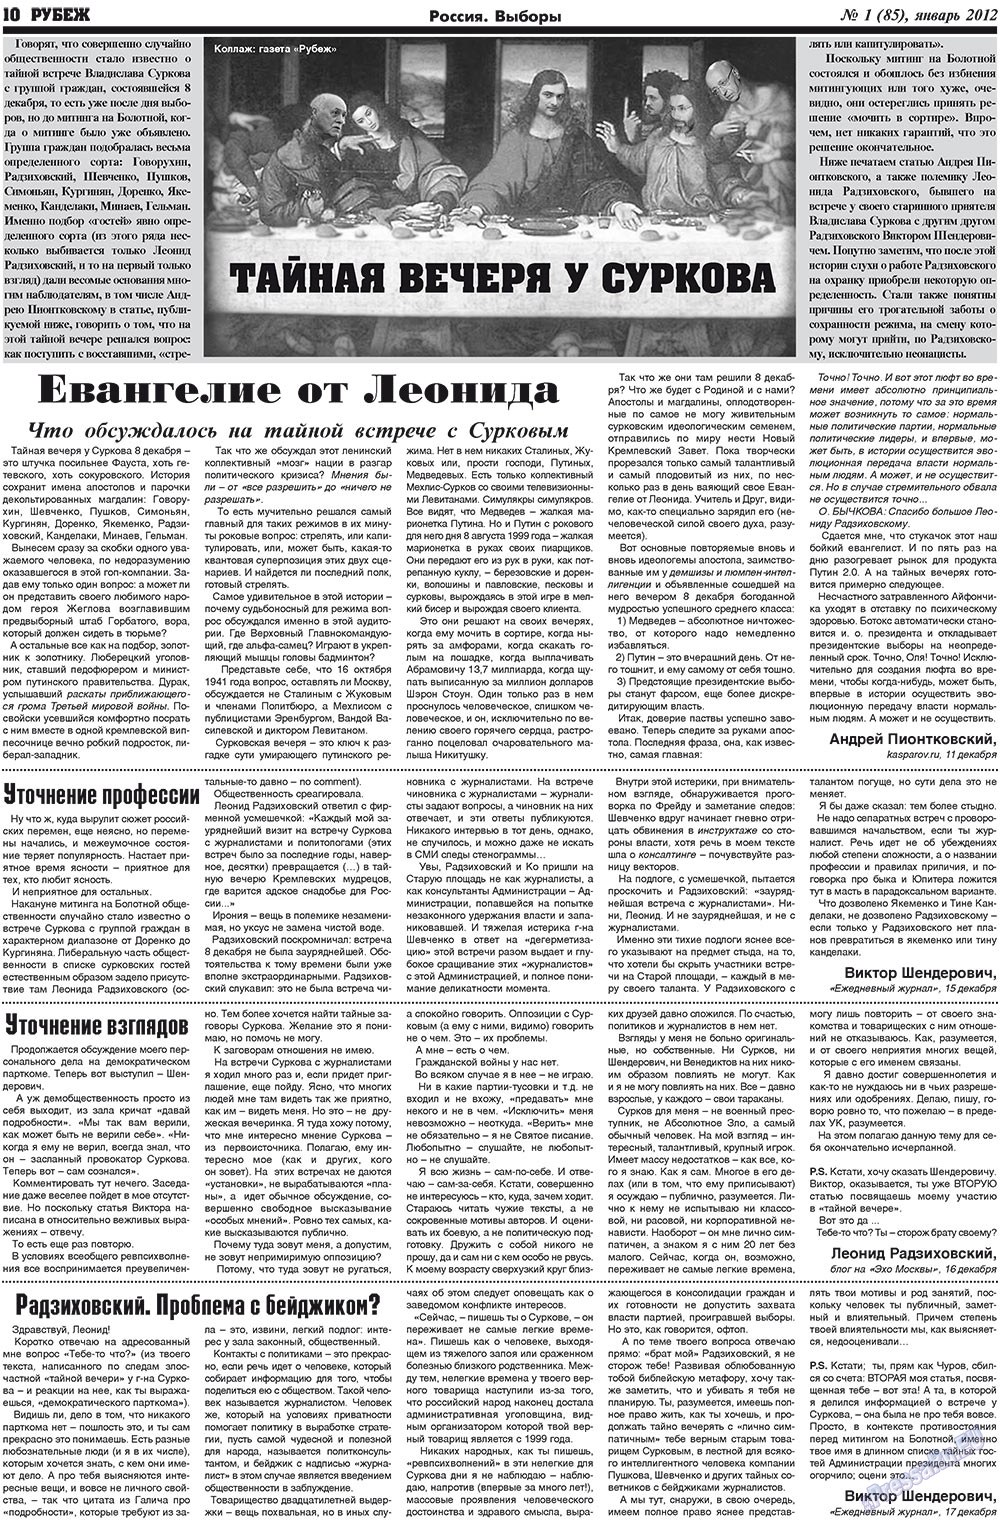 Рубеж, газета. 2012 №1 стр.10